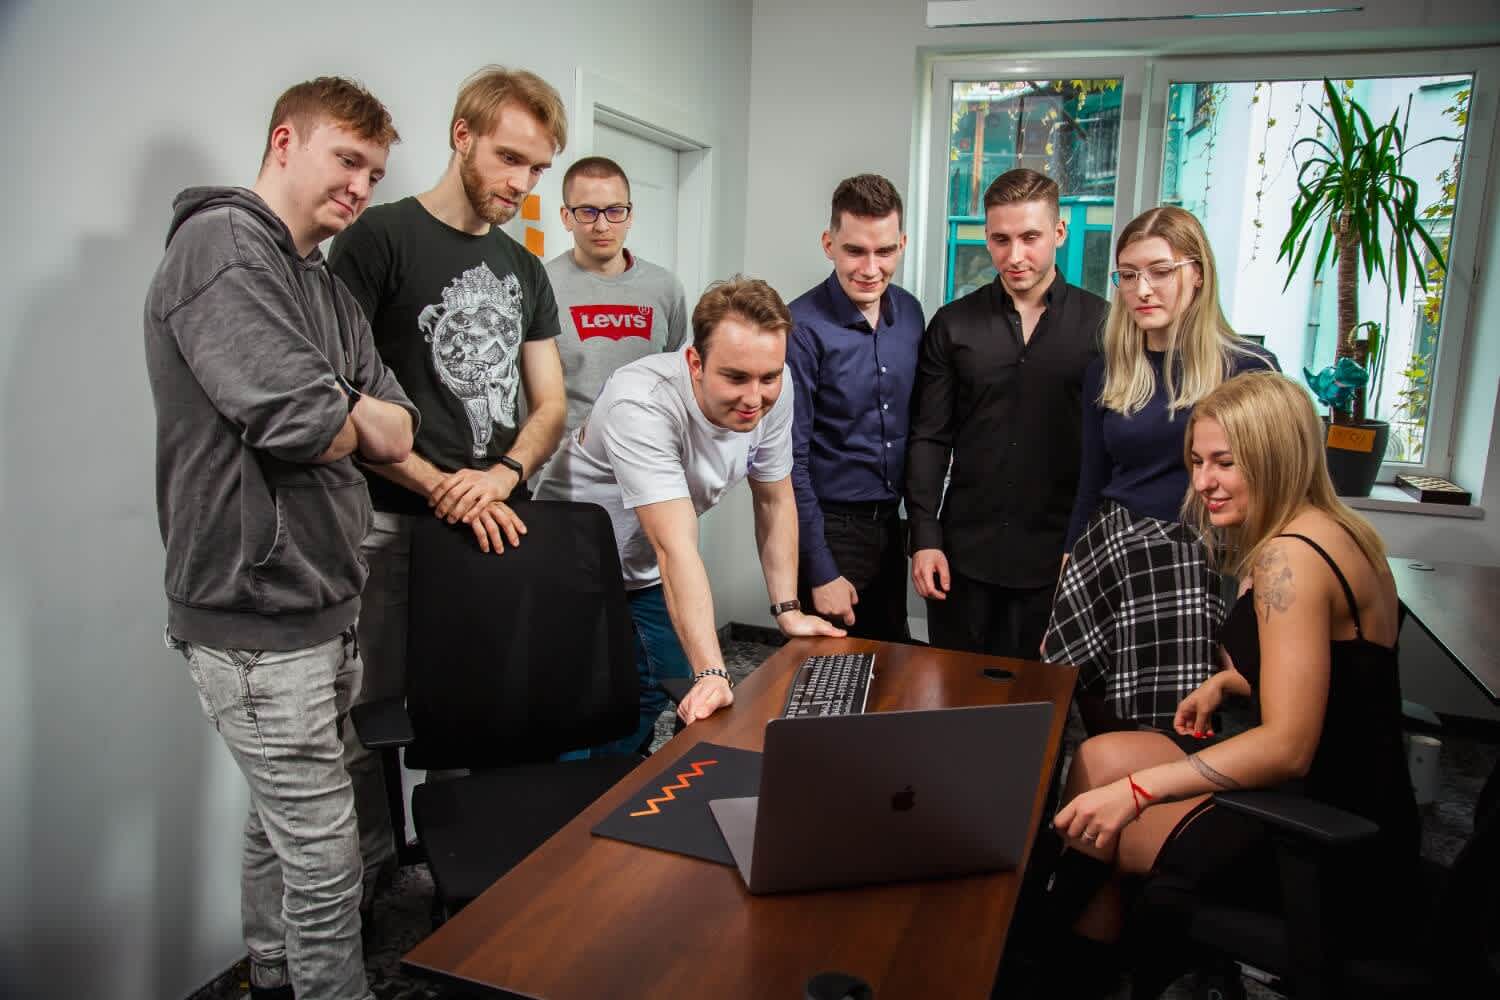 salesforce team gathered around desk looking at laptop